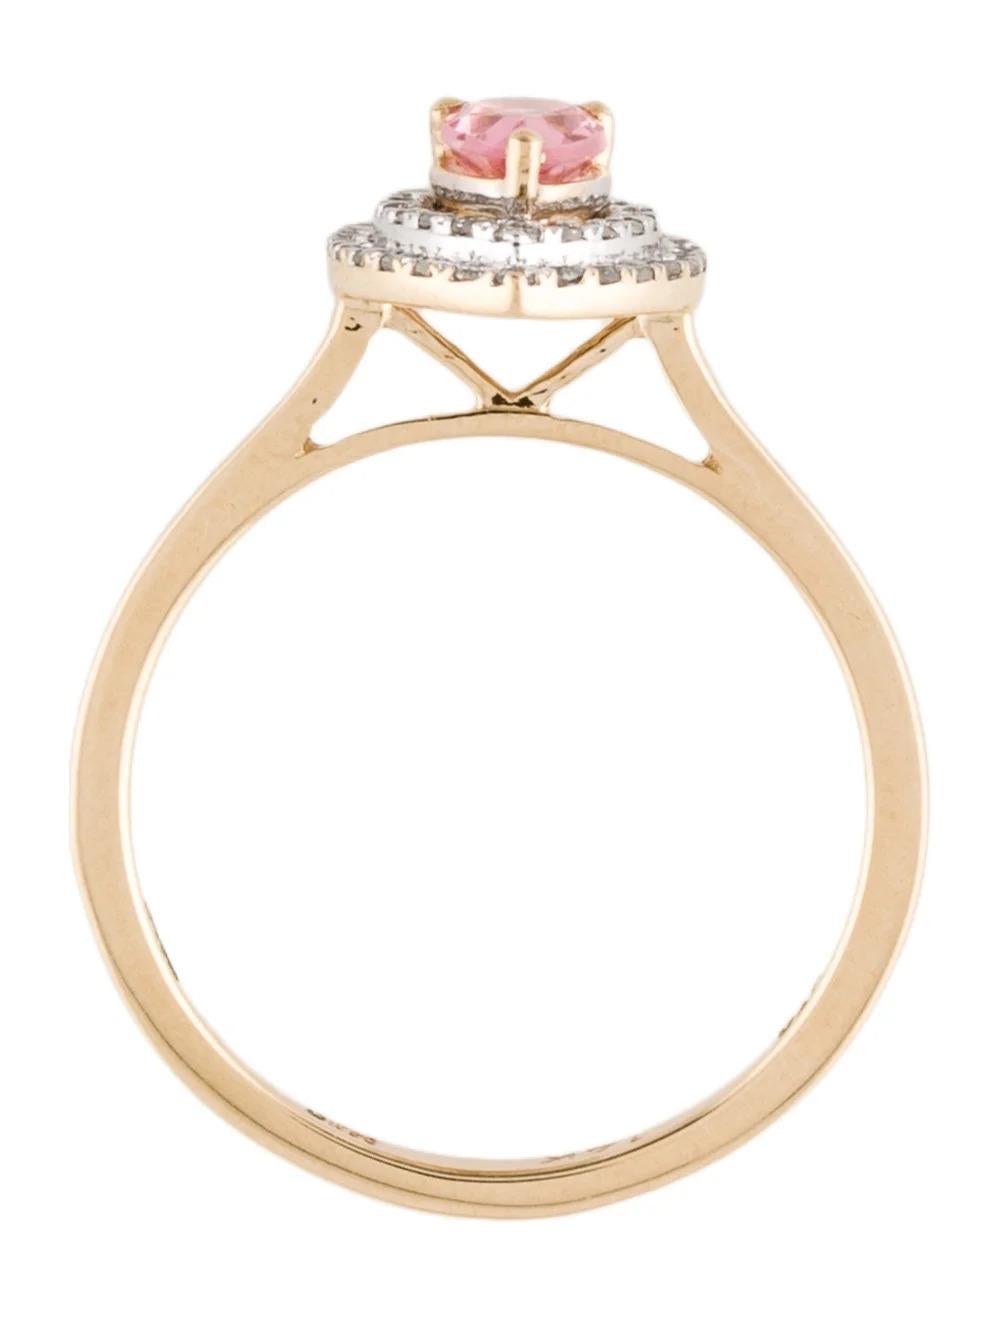 Women's 14K Tourmaline & Diamond Cocktail Ring, Size 6.5 - Elegant Design, Fine Jewelry For Sale